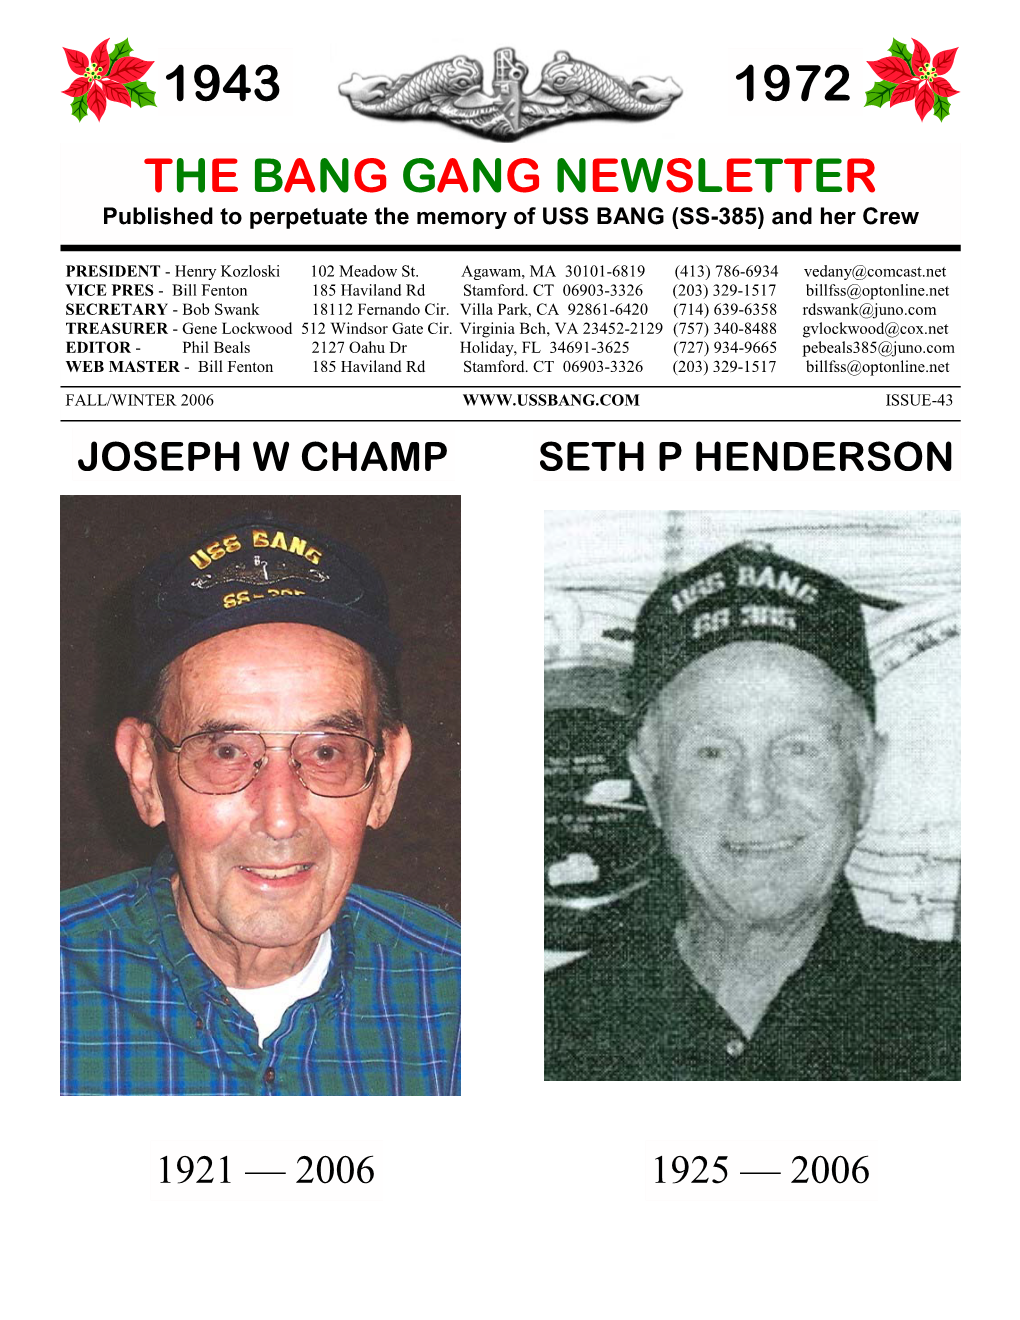 Fall/Winter 2006 Issue-43 Joseph W Champ Seth P Henderson